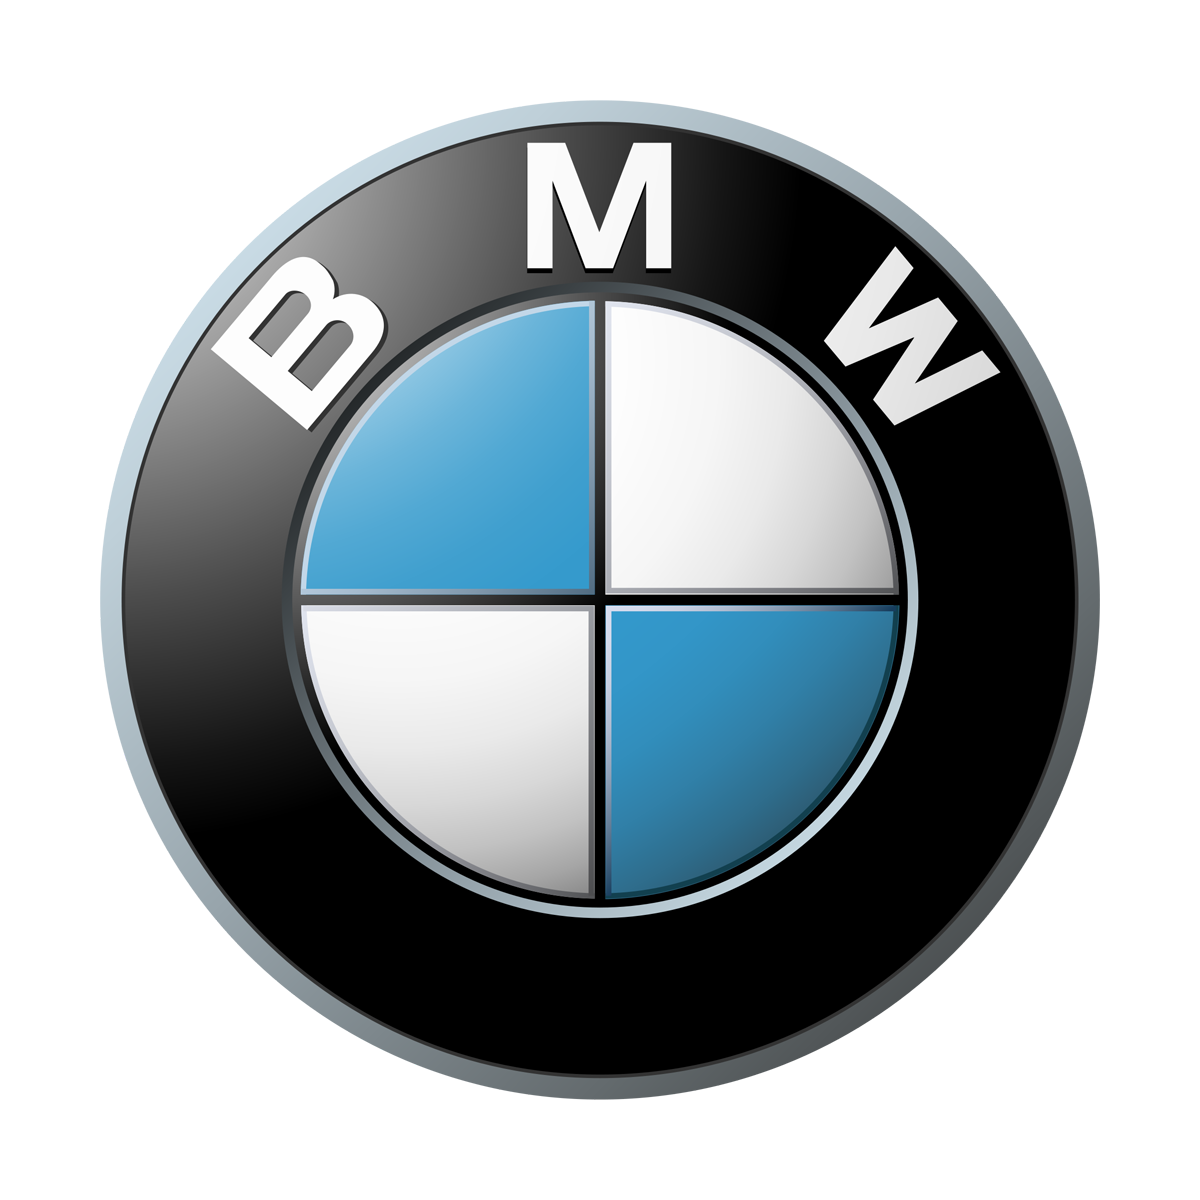 bmw-logo-1997-1200x1200.png